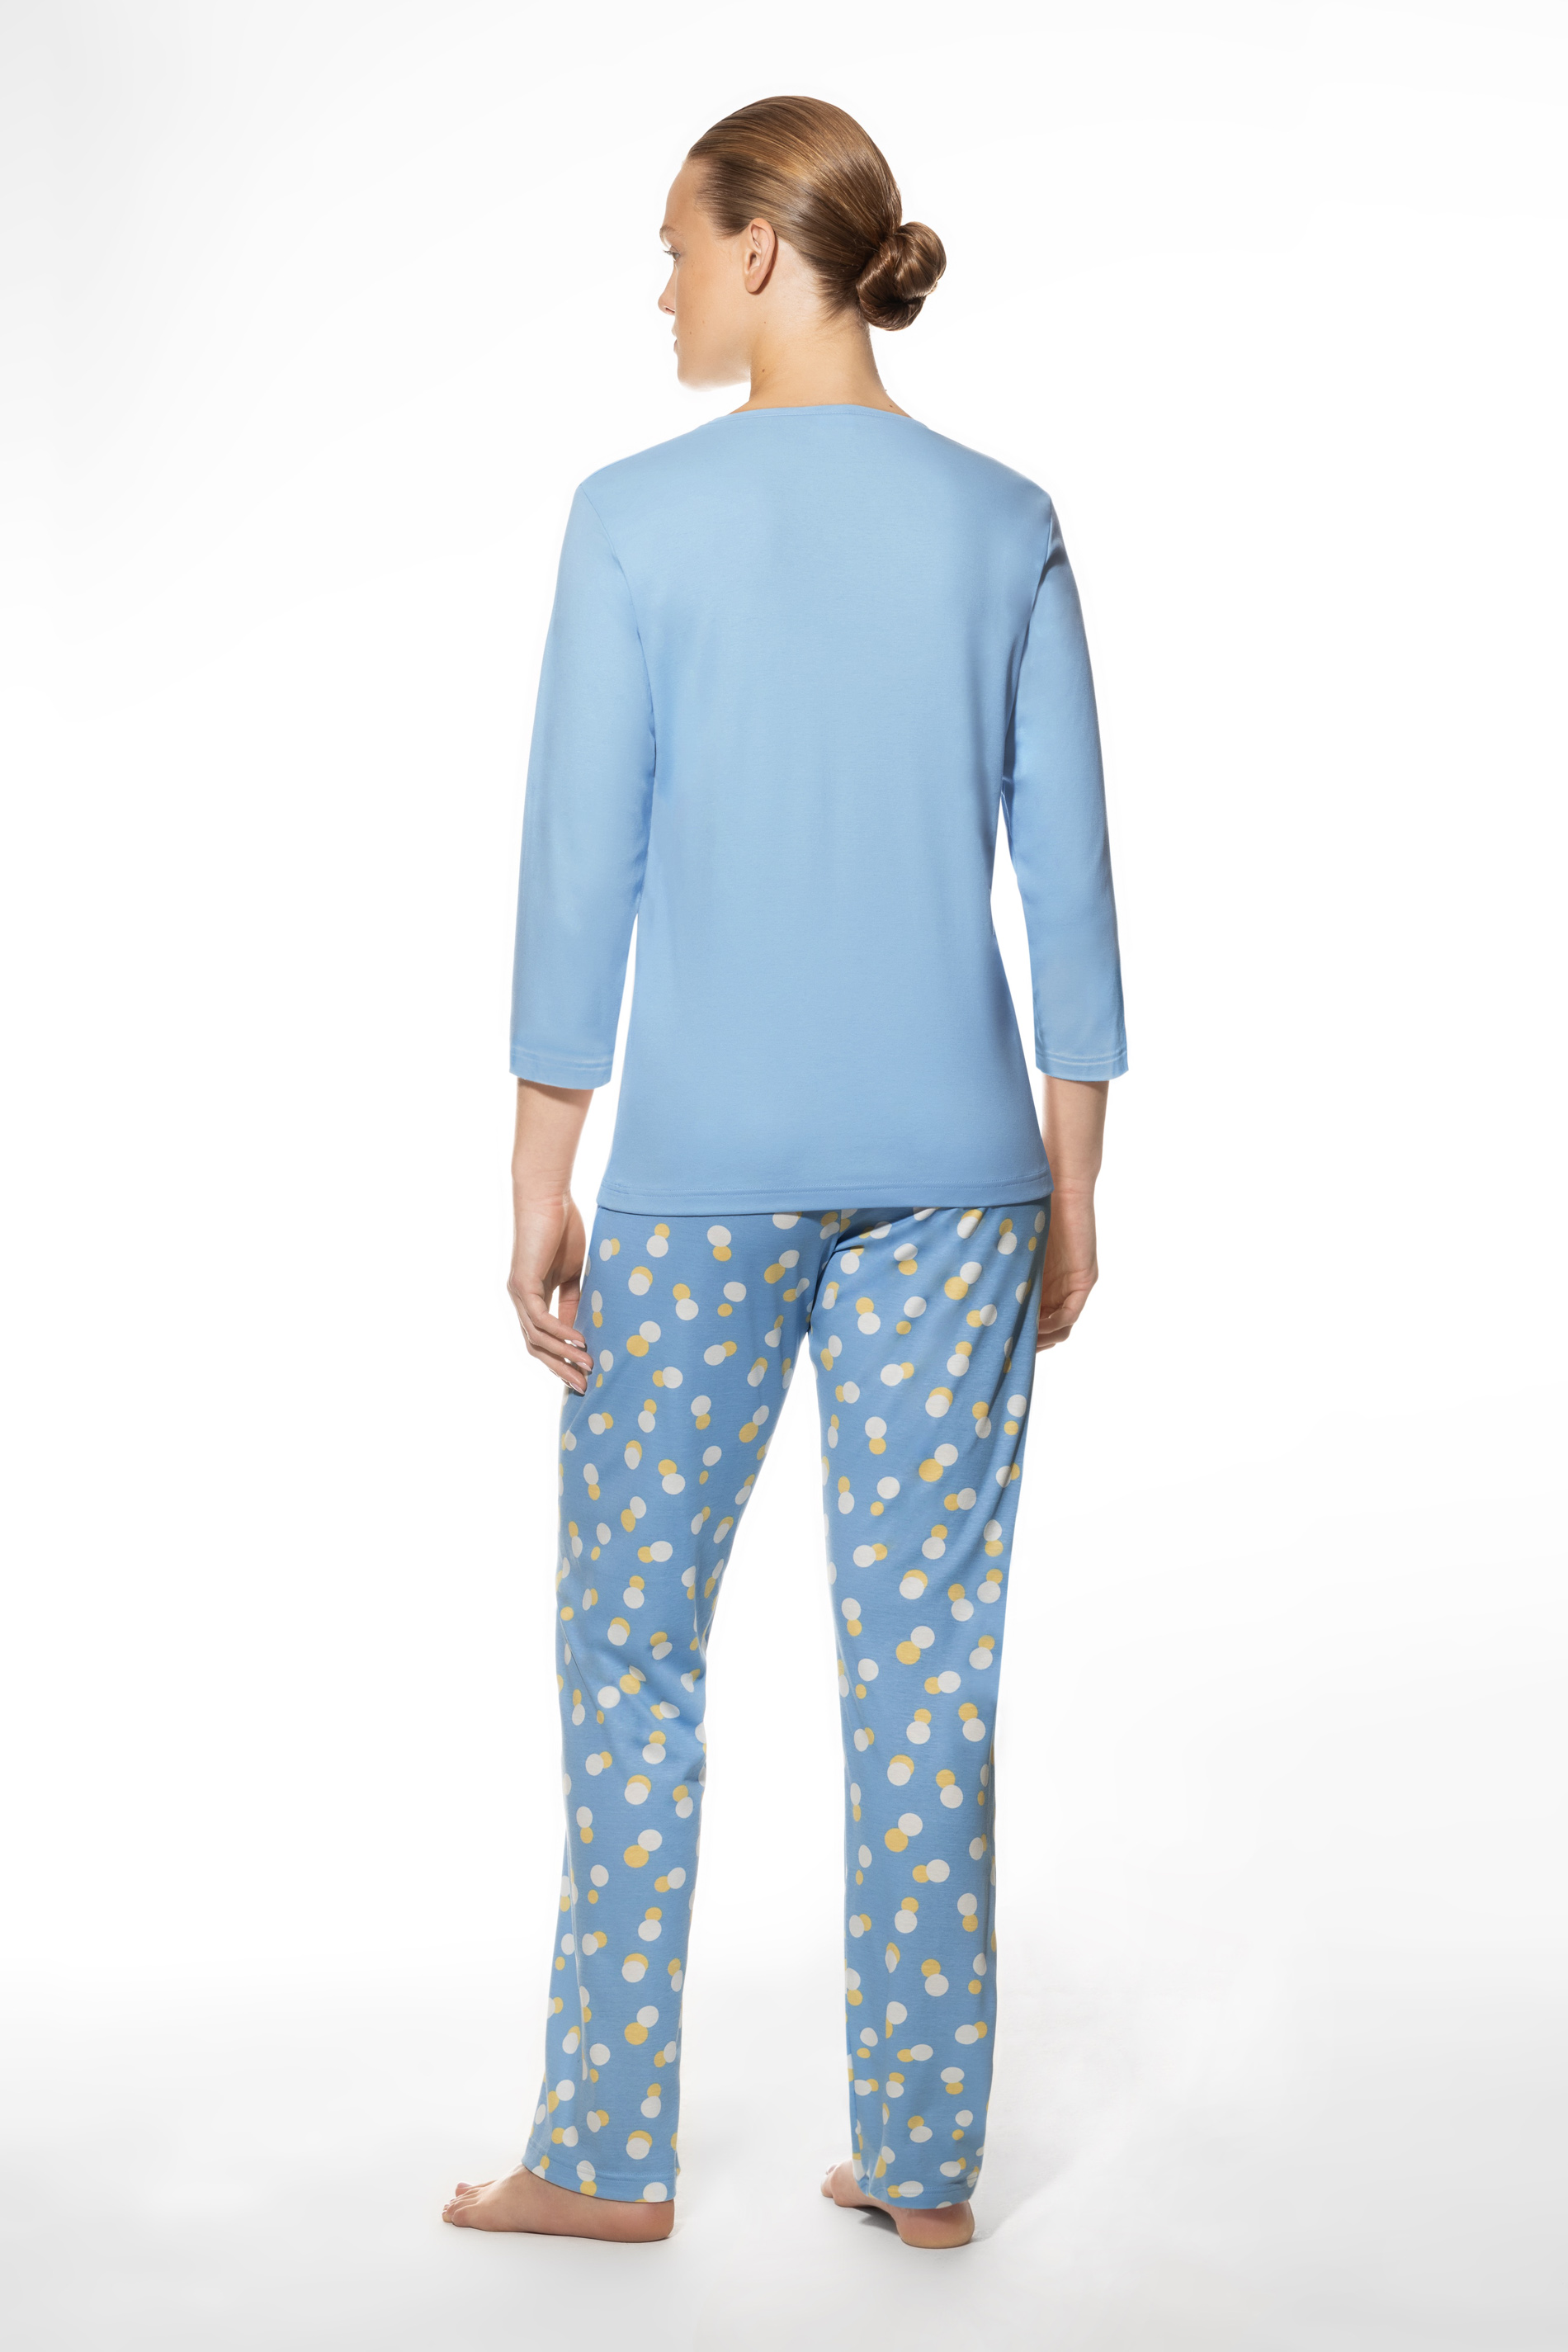 Pyjama Serie Adryelle Rear View | mey®